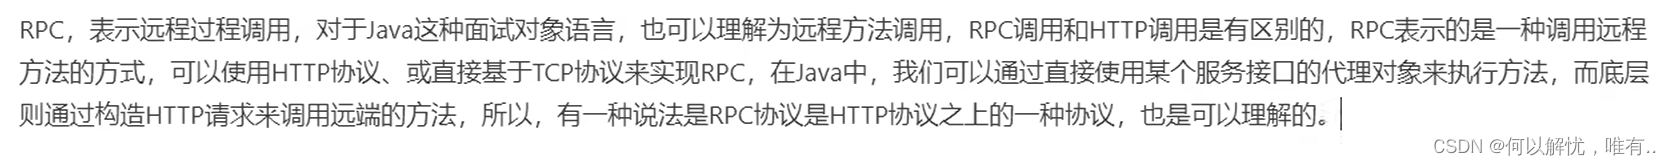 RPC，表示远程过程调用，对于Java这种面向对象语言，